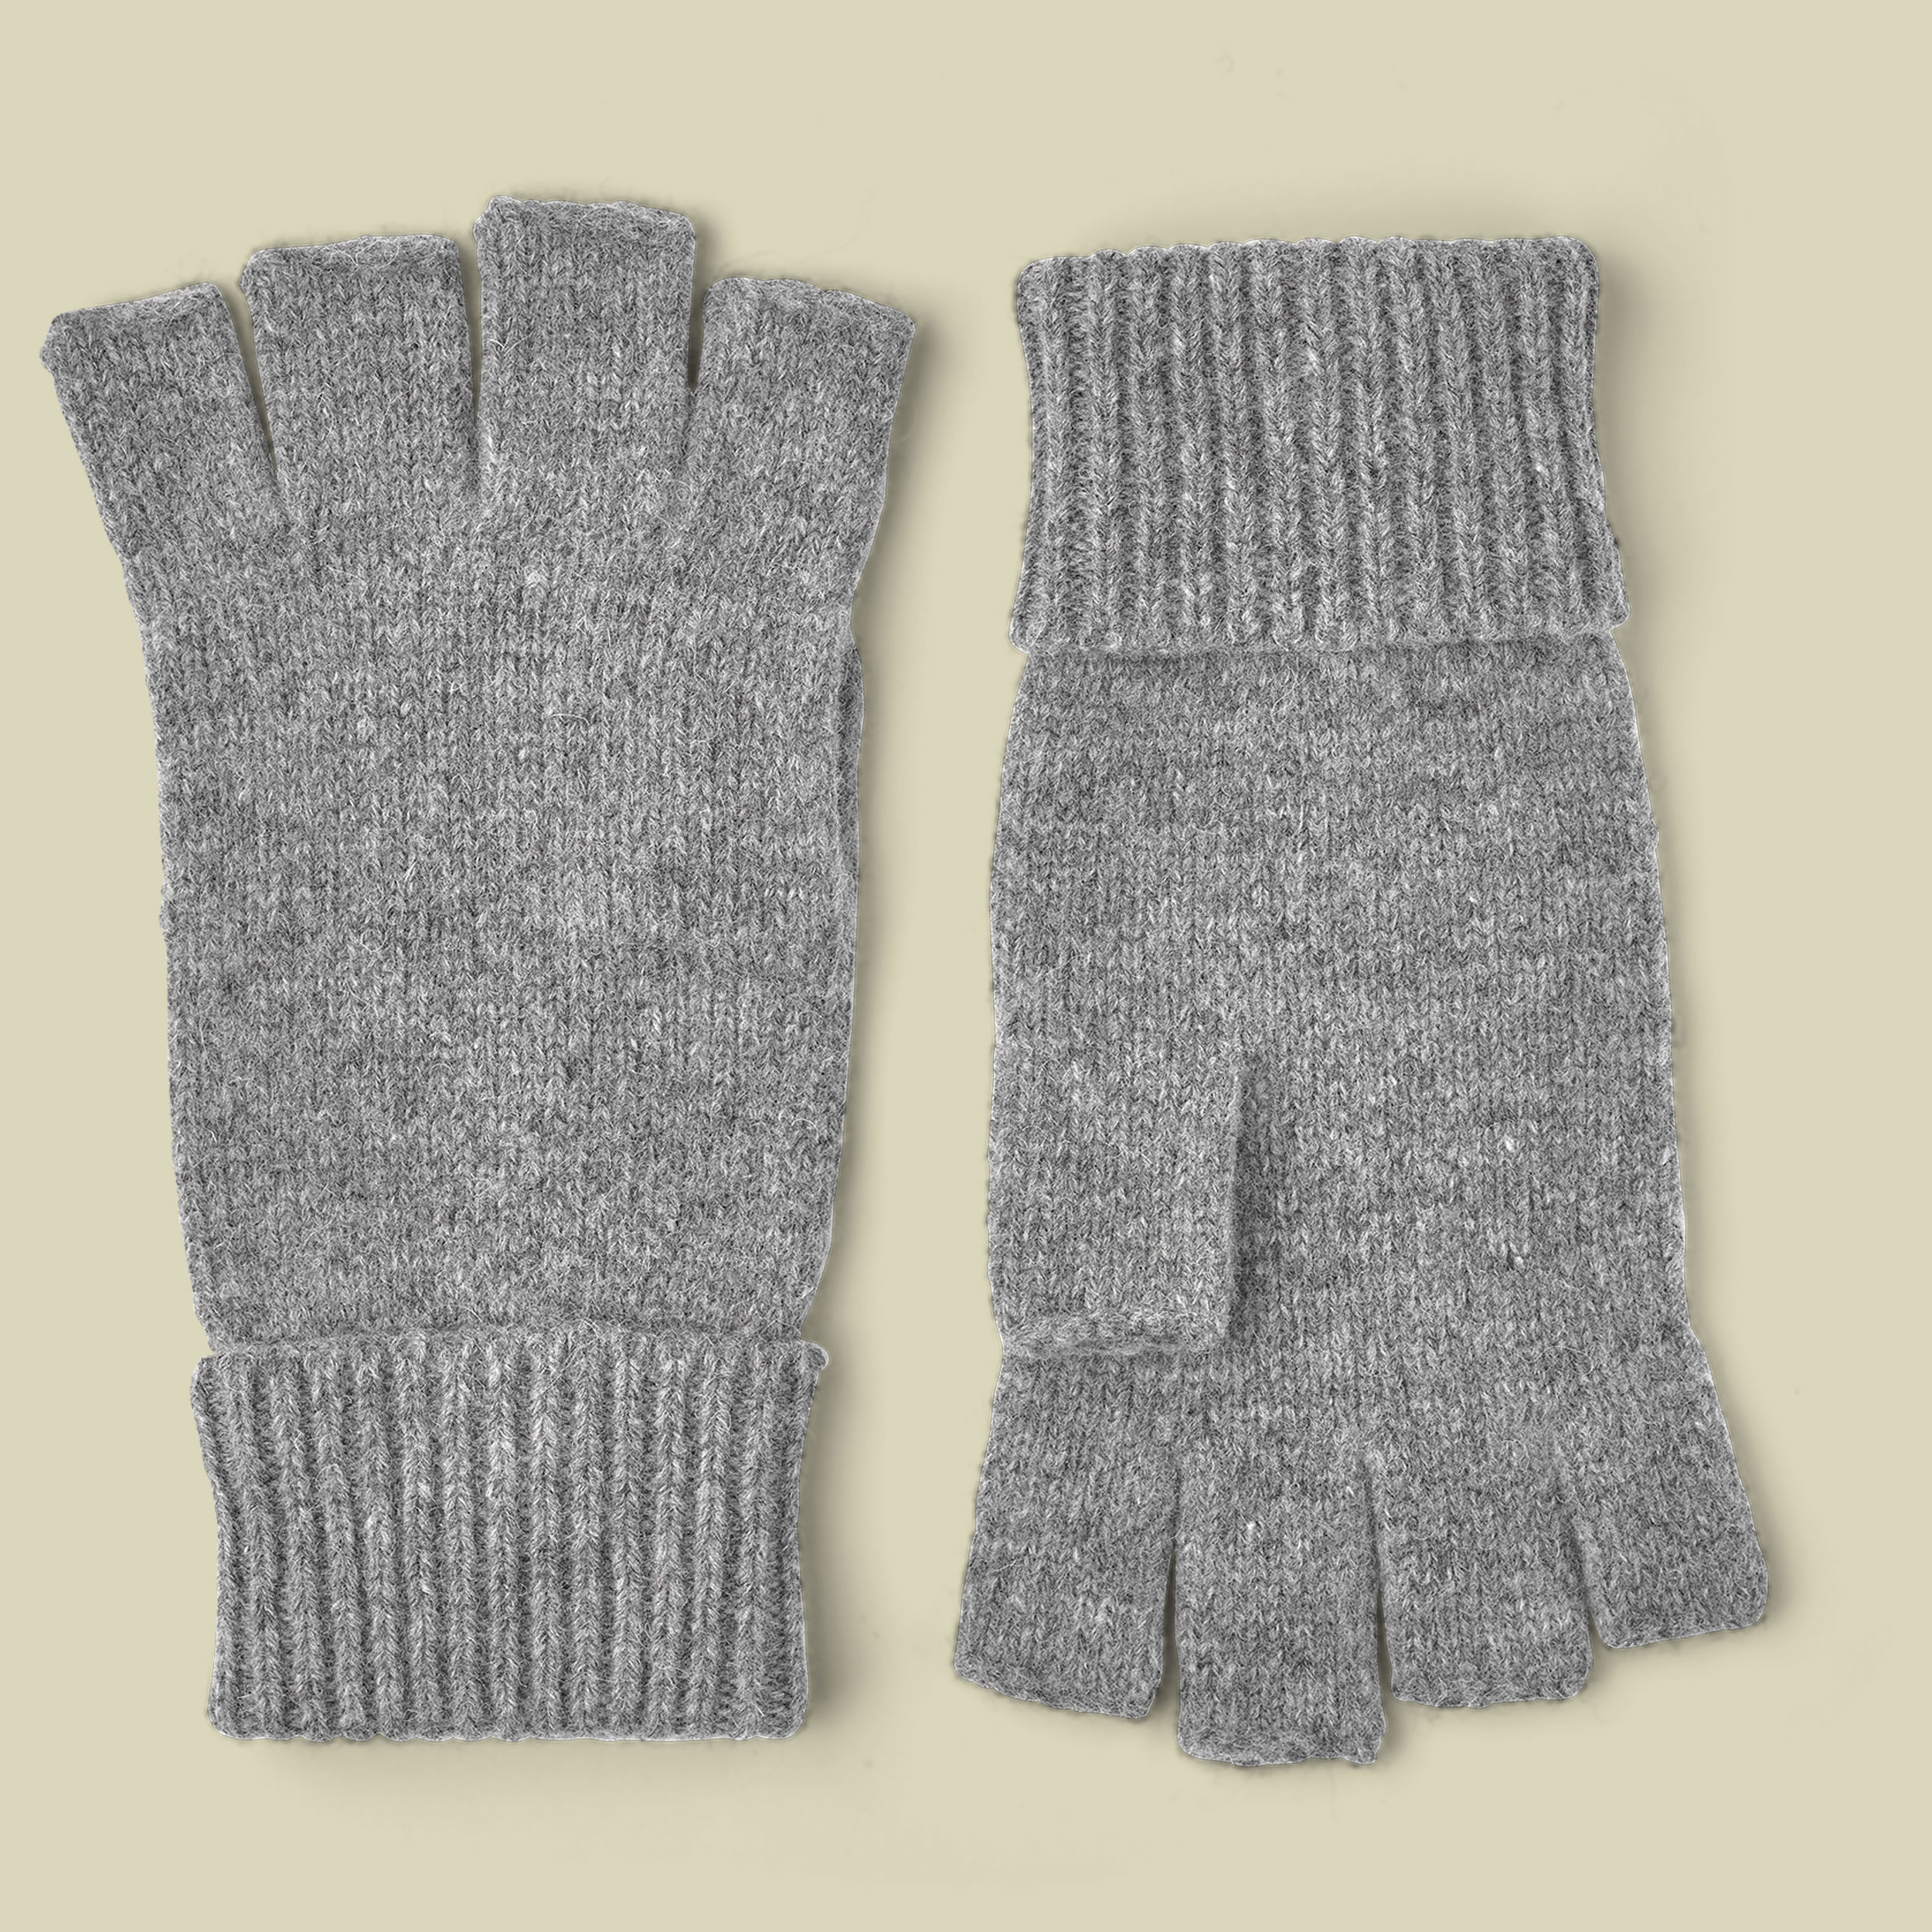 Basic Wool Half Finger Größe 6 Farbe grey